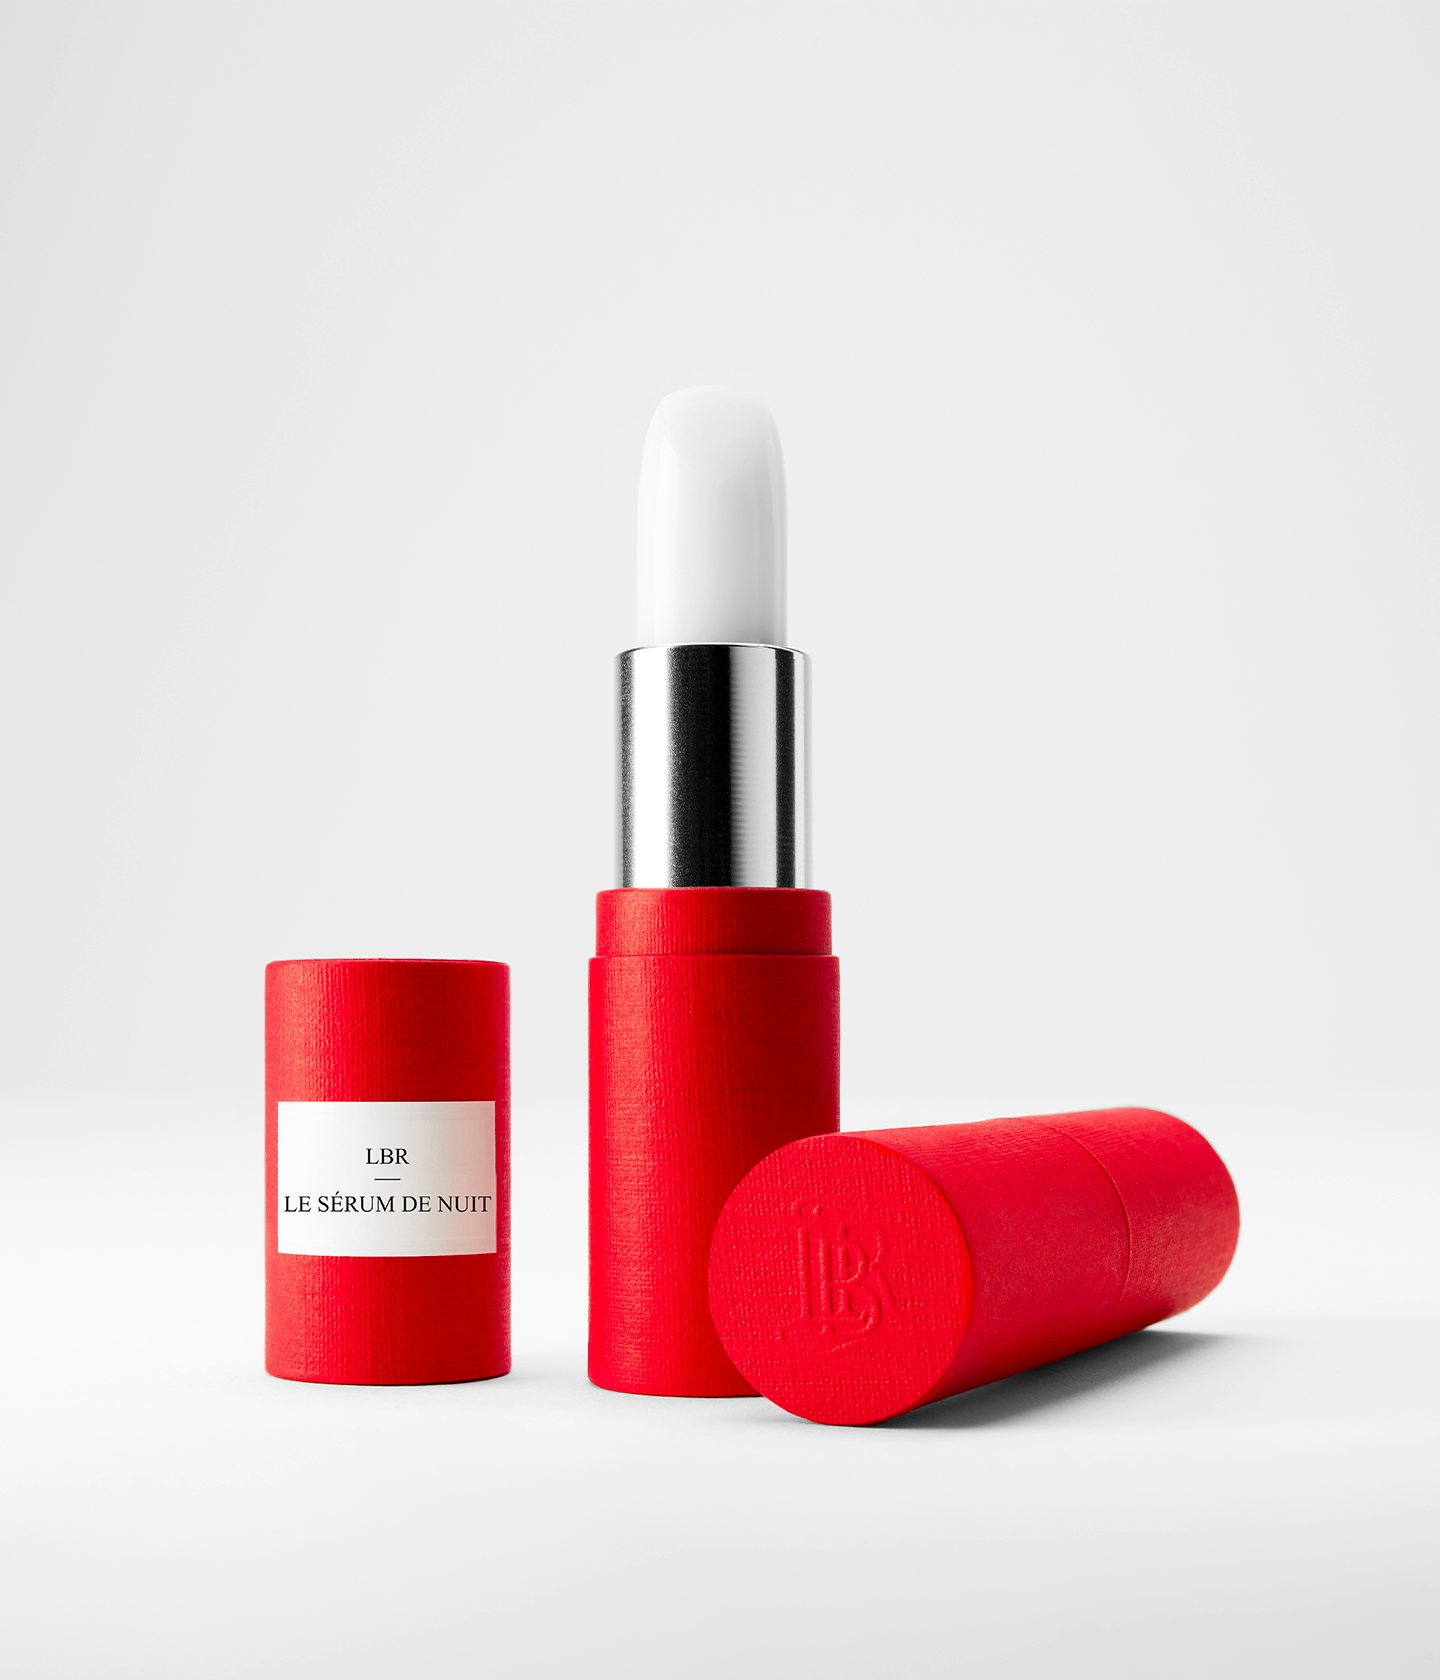 La bouche rouge night serum lipstick in the red paper case